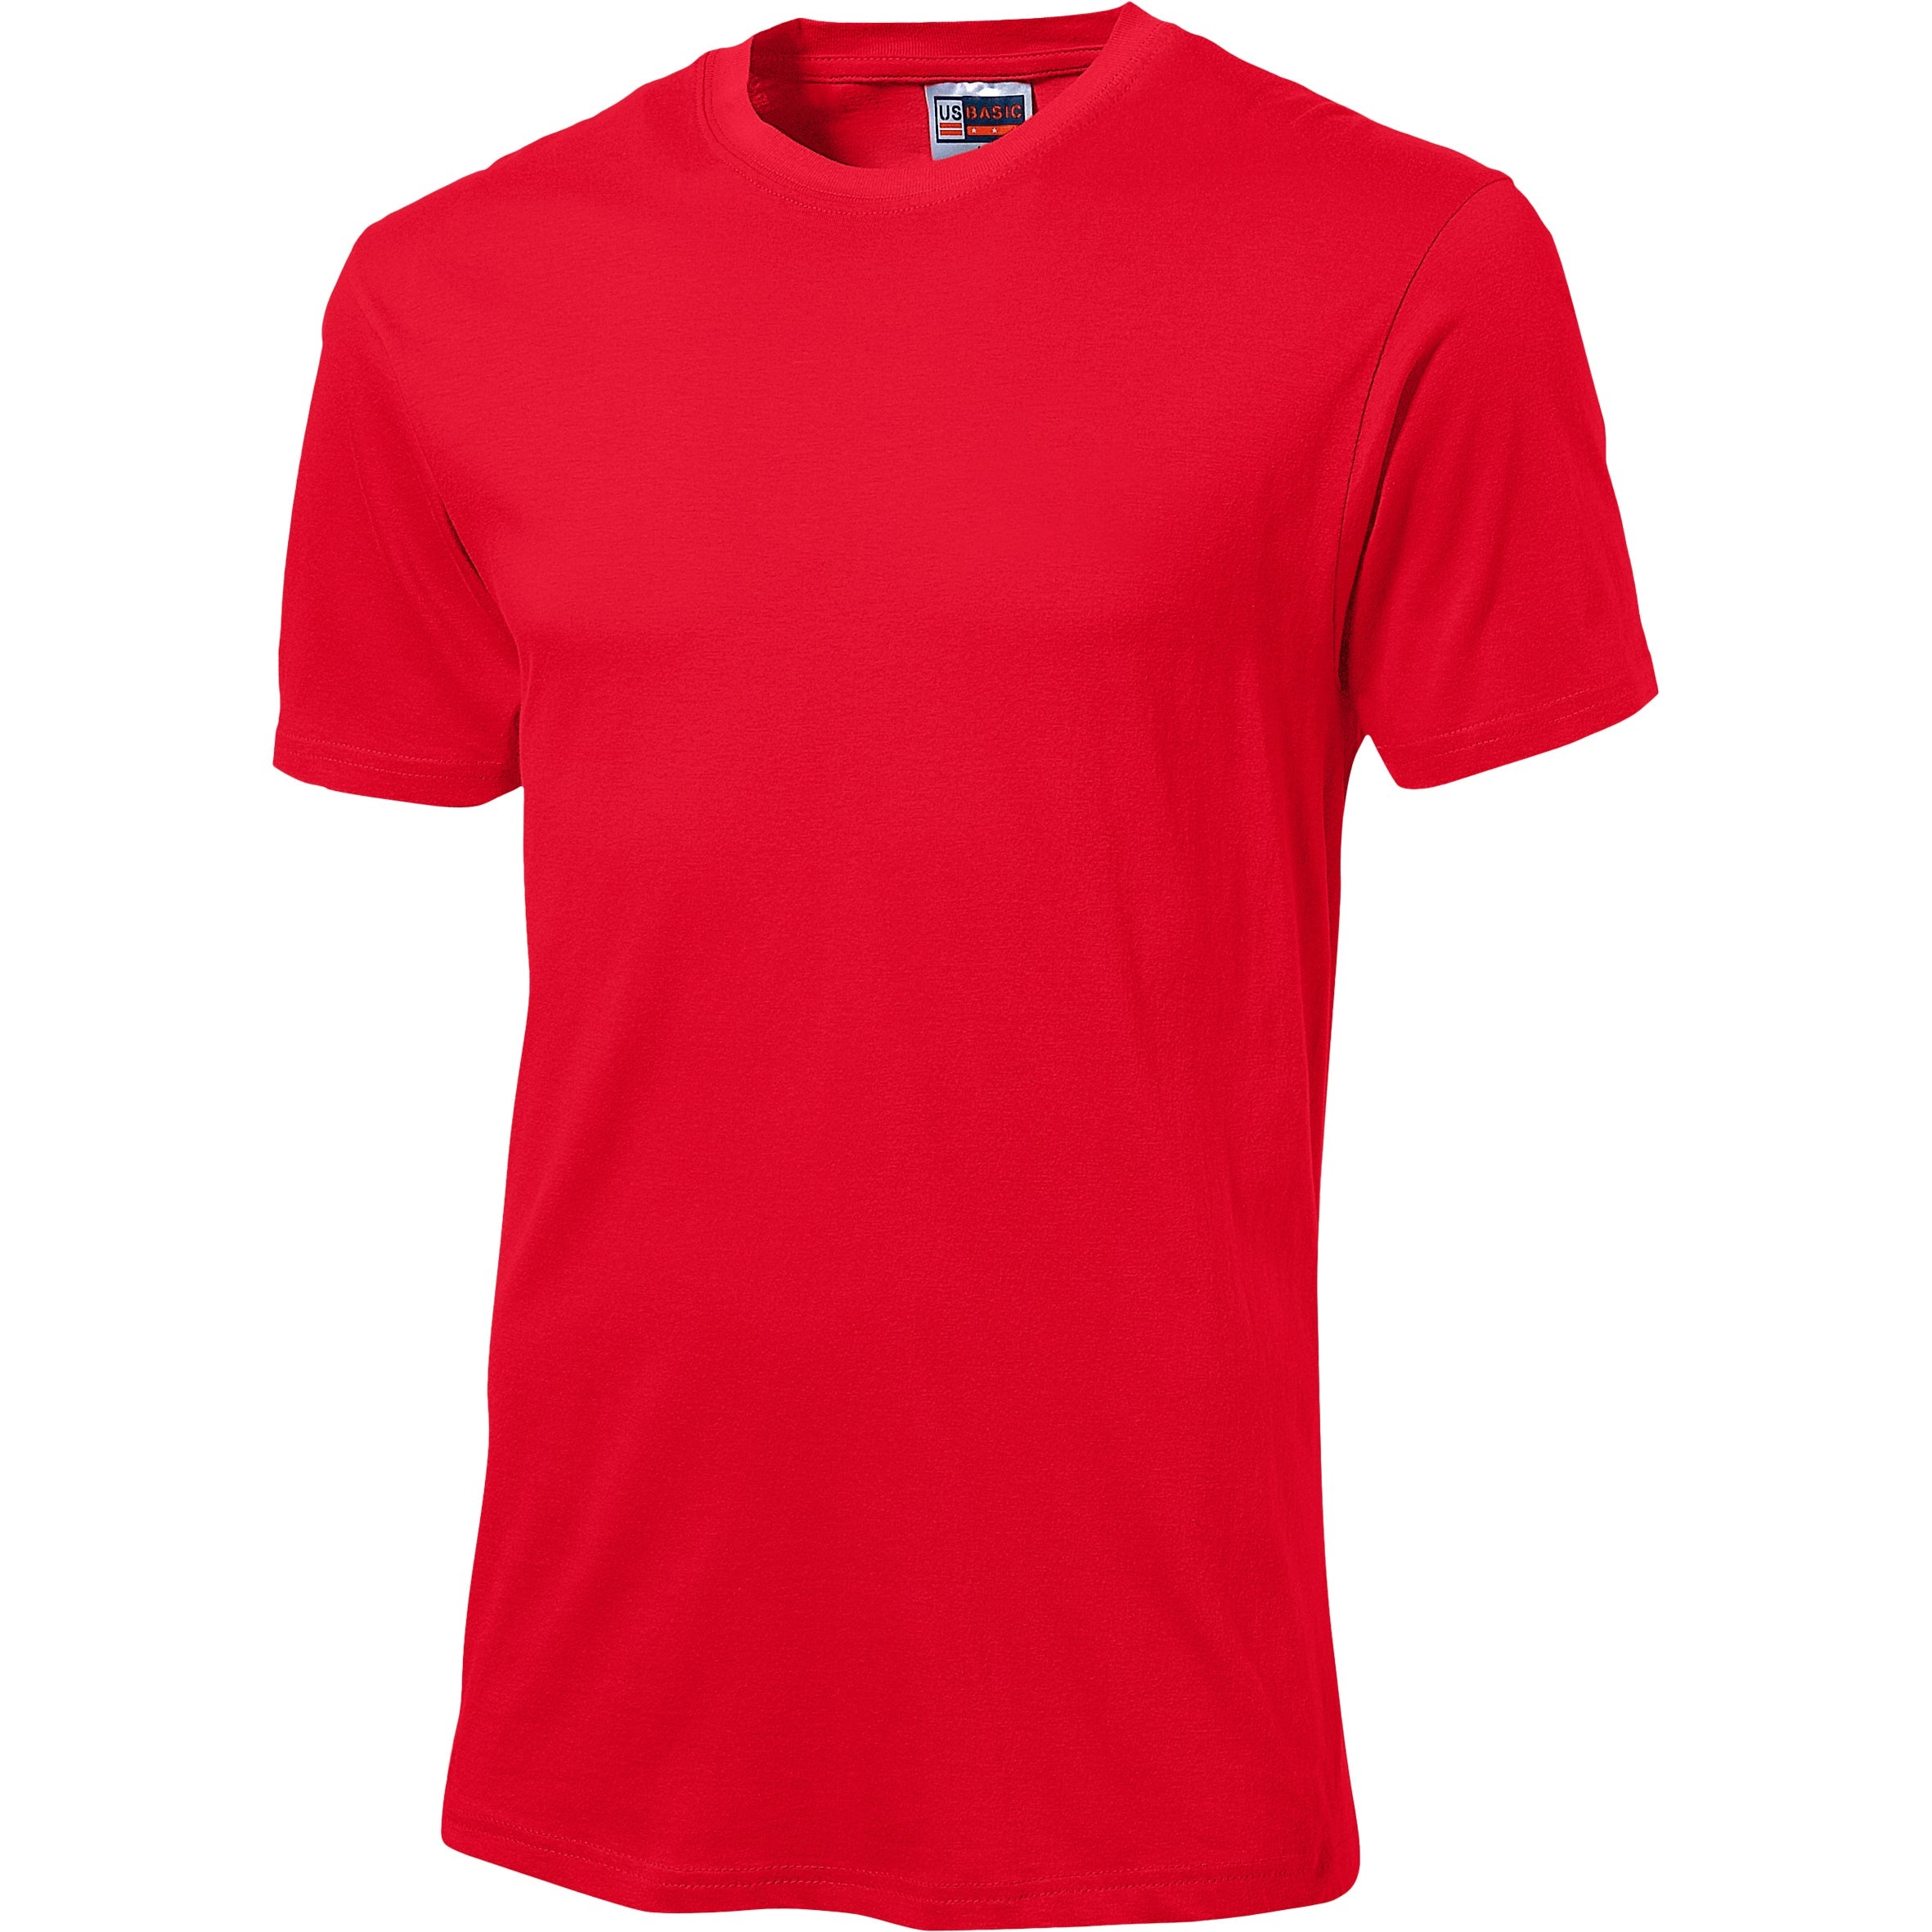 Unisex Super Club 135 T-Shirt L / Red / R